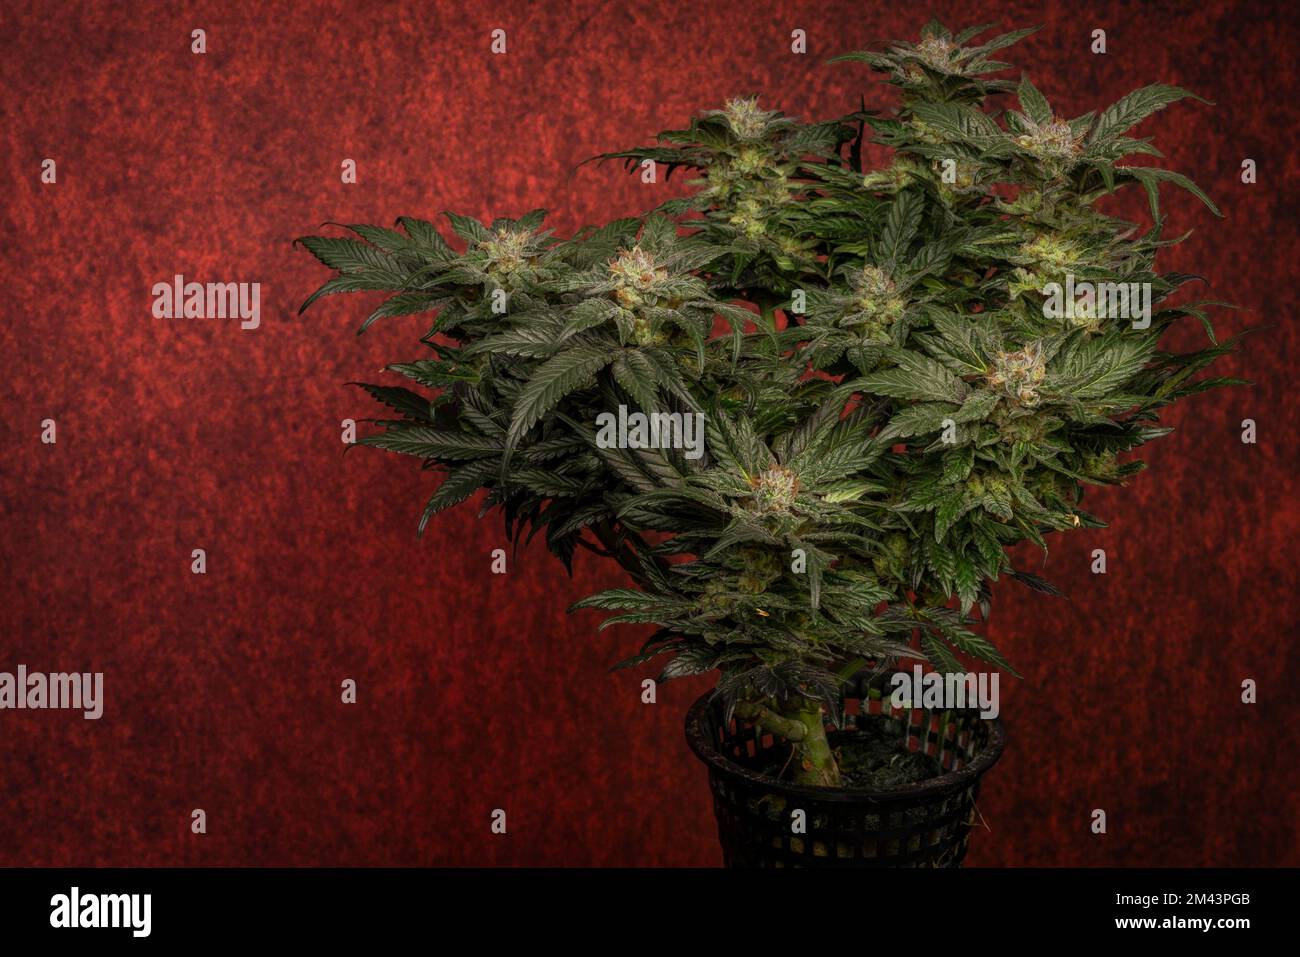 Mother of berries variety of marijuana with ripened bloom and dark red backbround Stock Photo